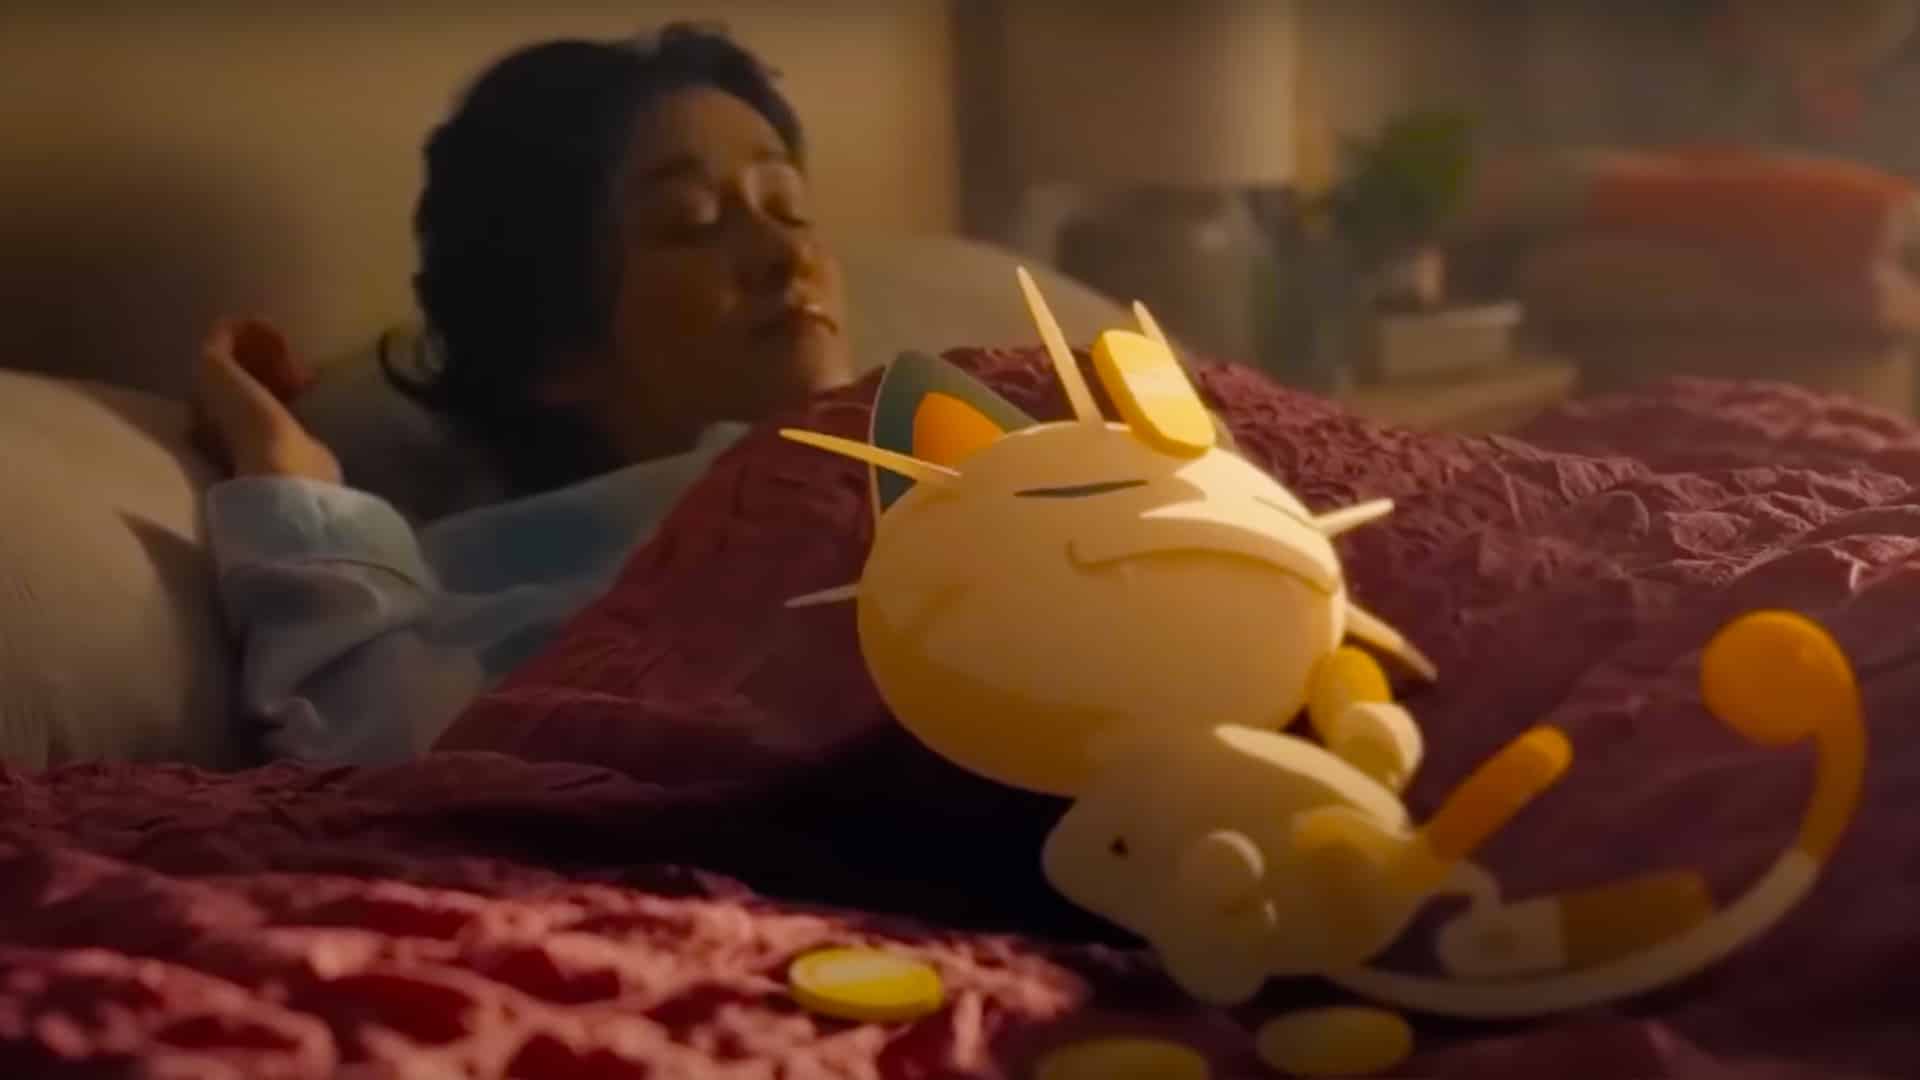 Pokémon Sleep: Now Players Can Game Even While They Sleep